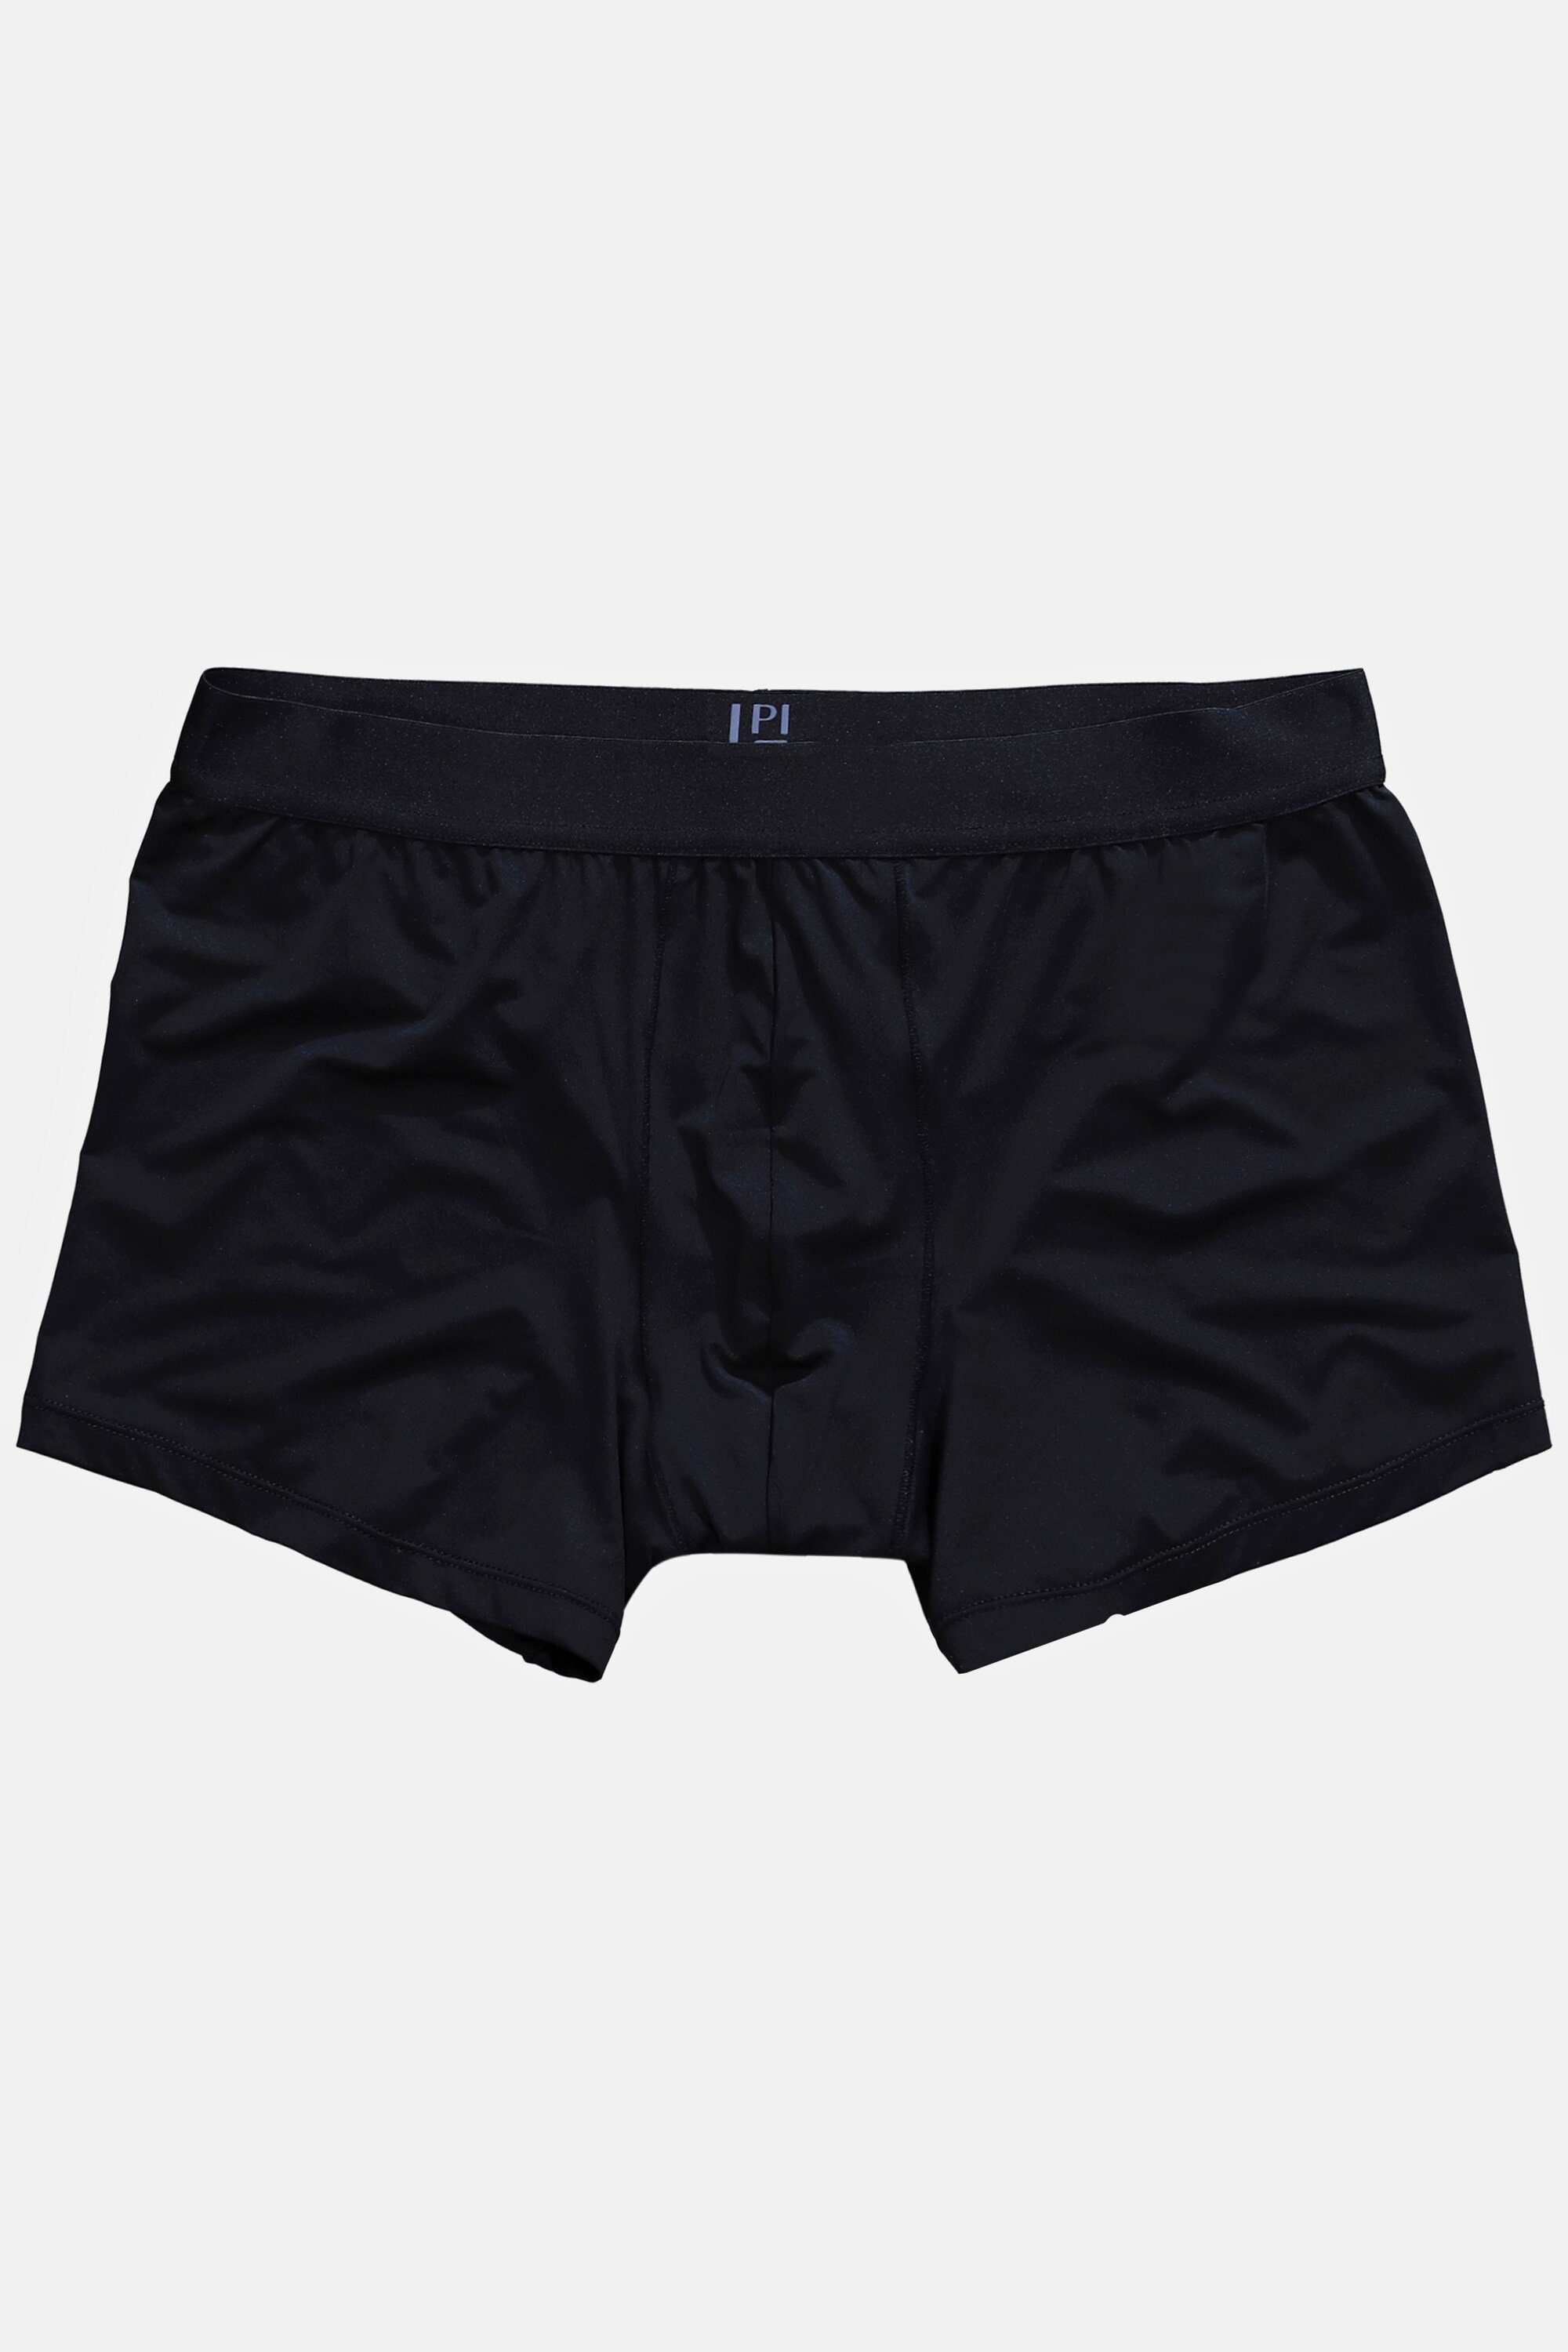 Fitness Boxershorts Unterhose schwarz Pant JP1880